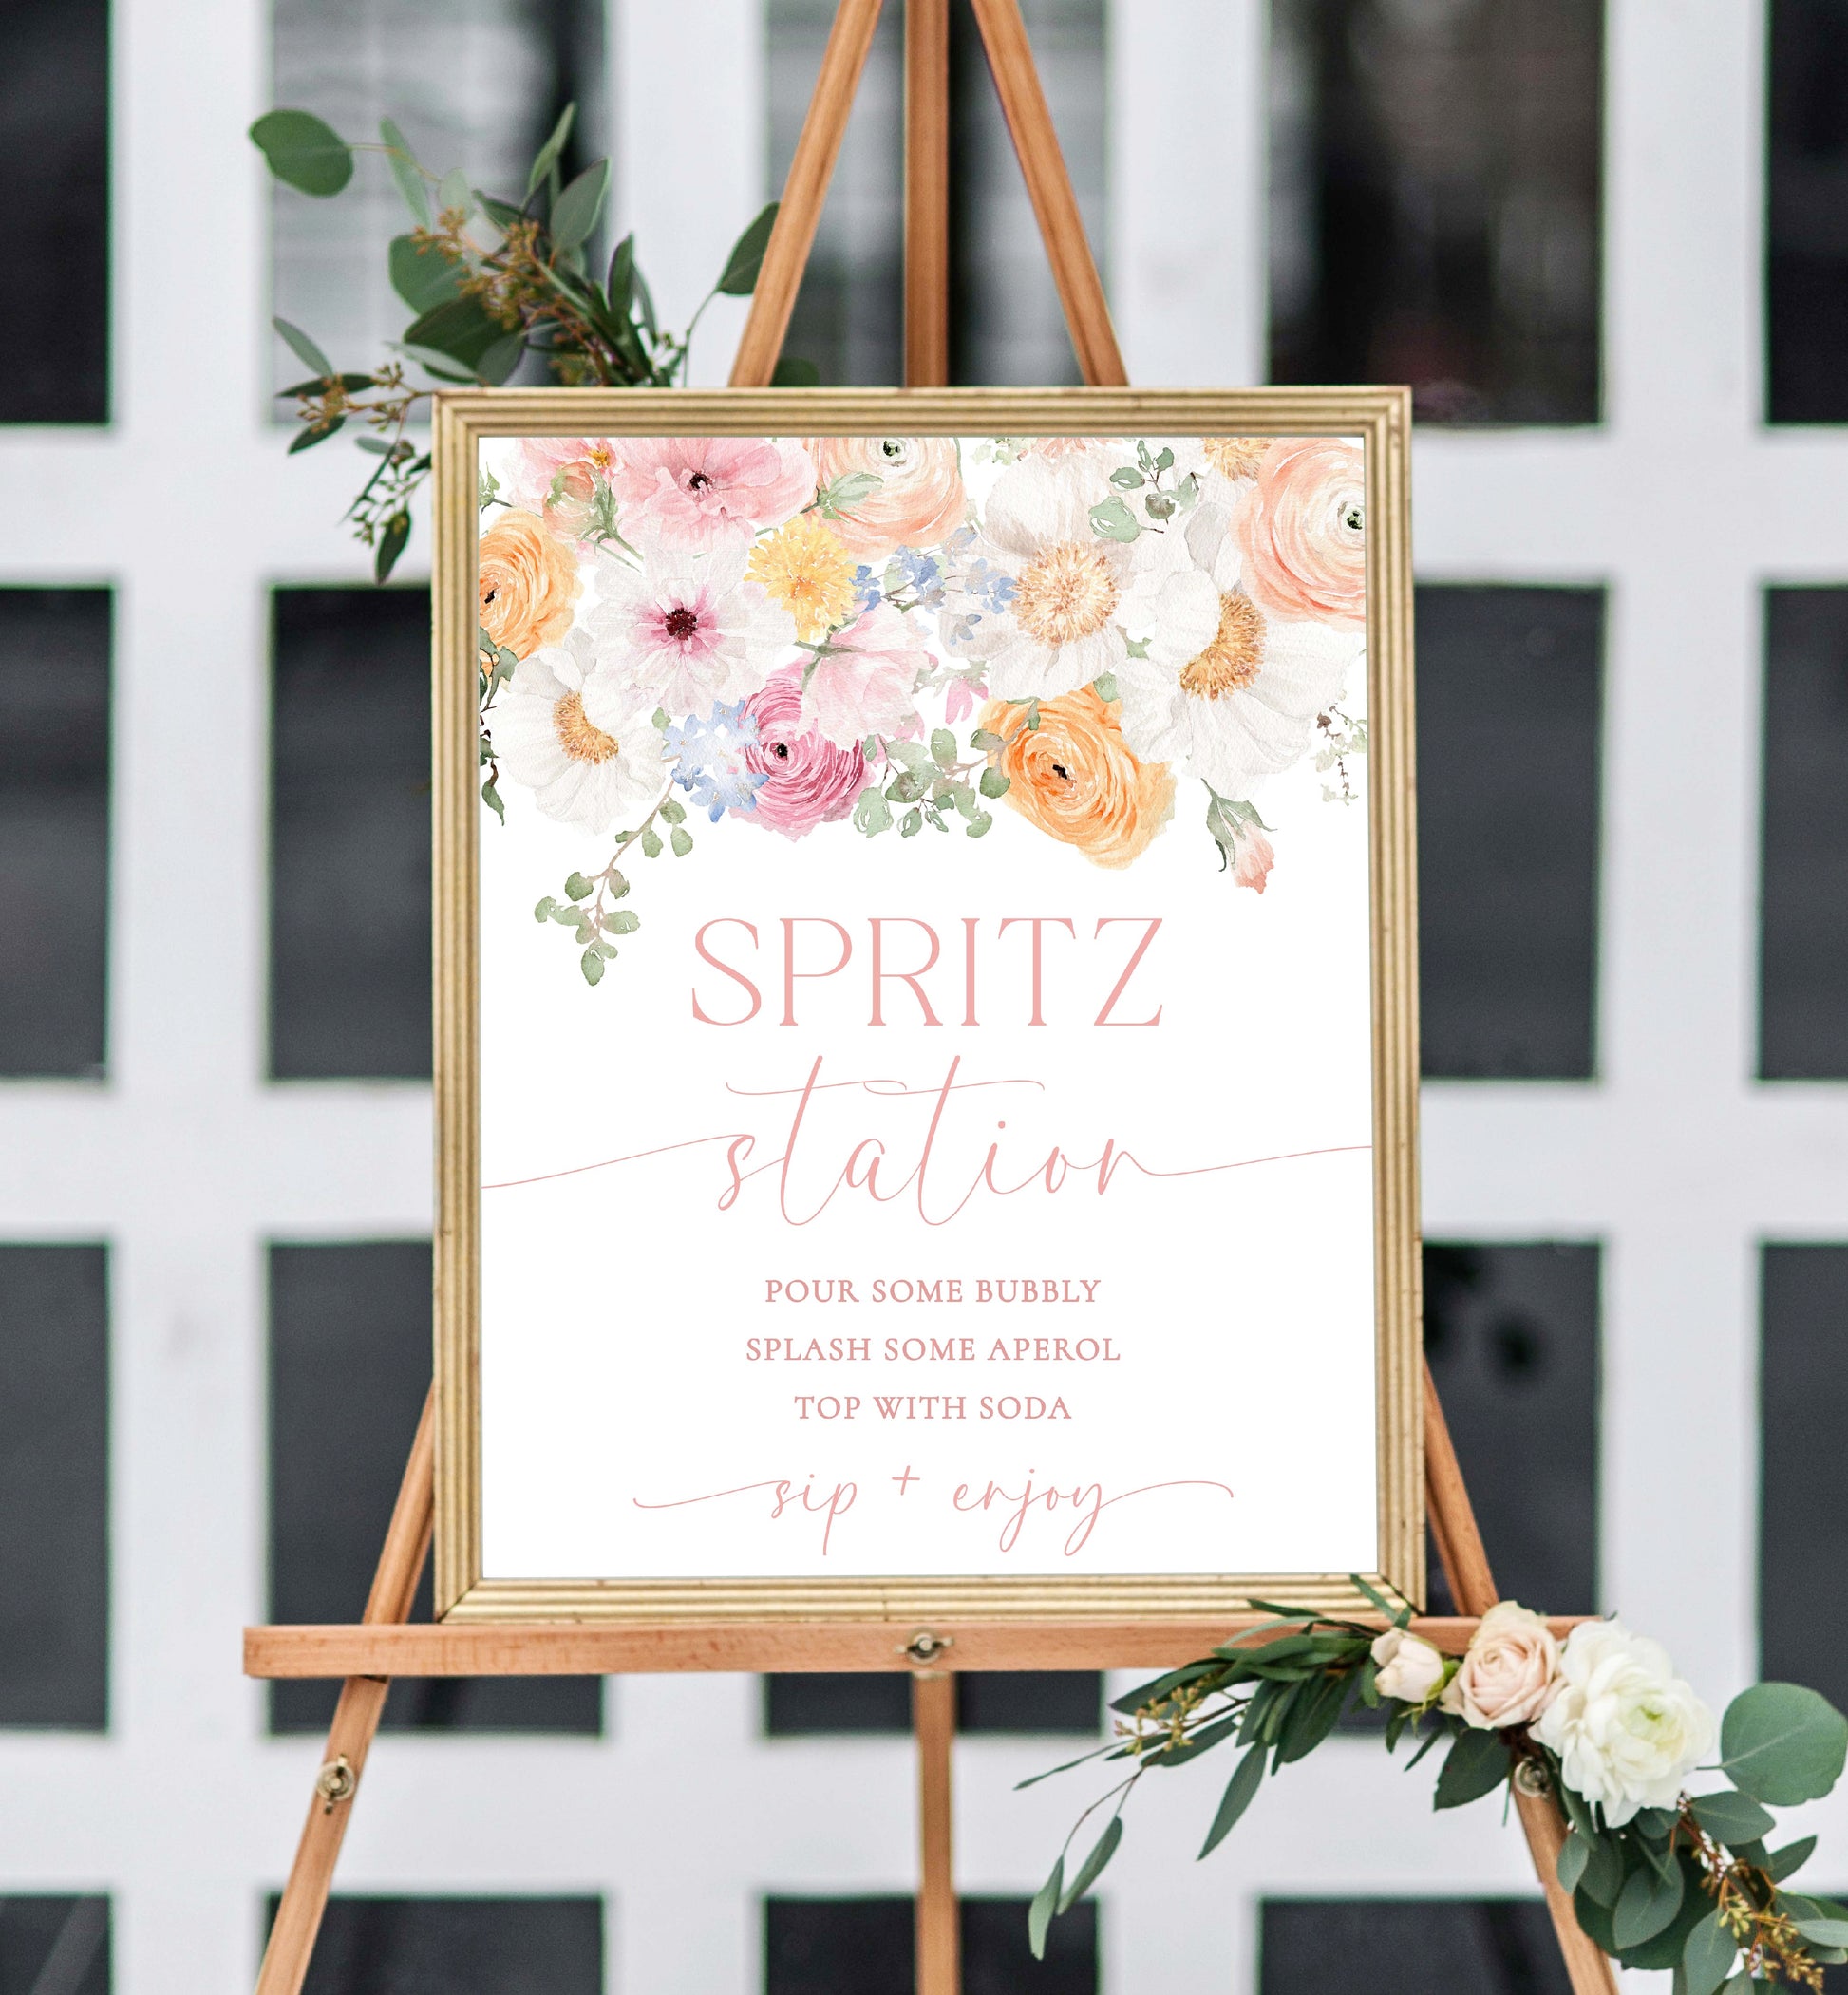 Spritz Station Sign, Printable Aperol Spritz Cocktail Sign, Boho Wildflower, Wedding Cocktail Bar Sign, Signature Drinks Sign, Millie